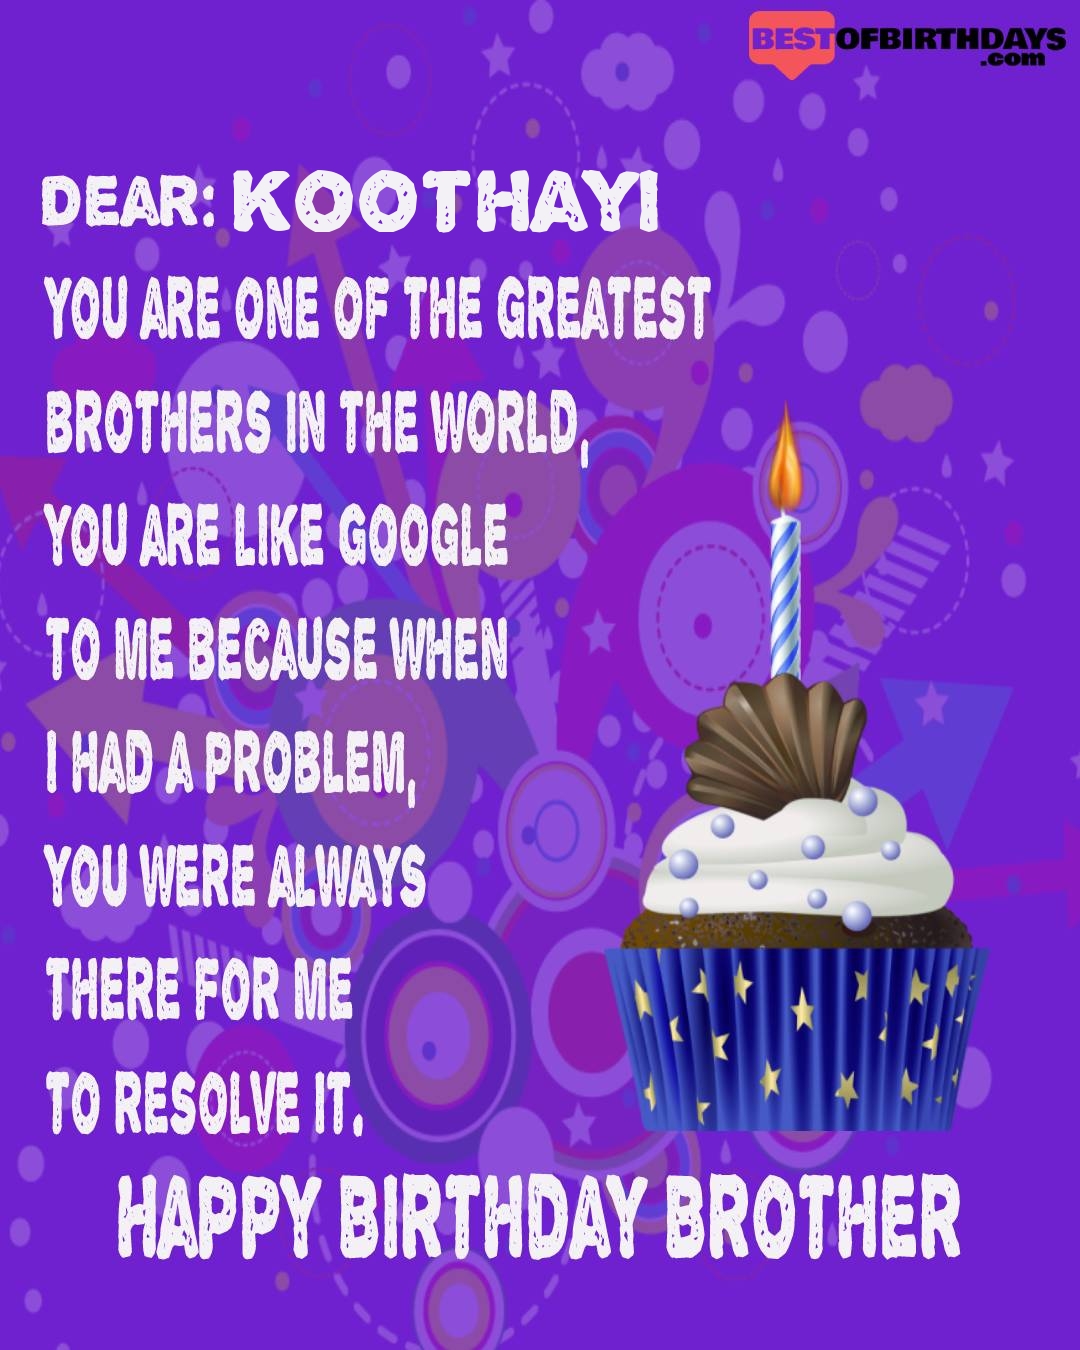 Happy birthday koothayi bhai brother bro